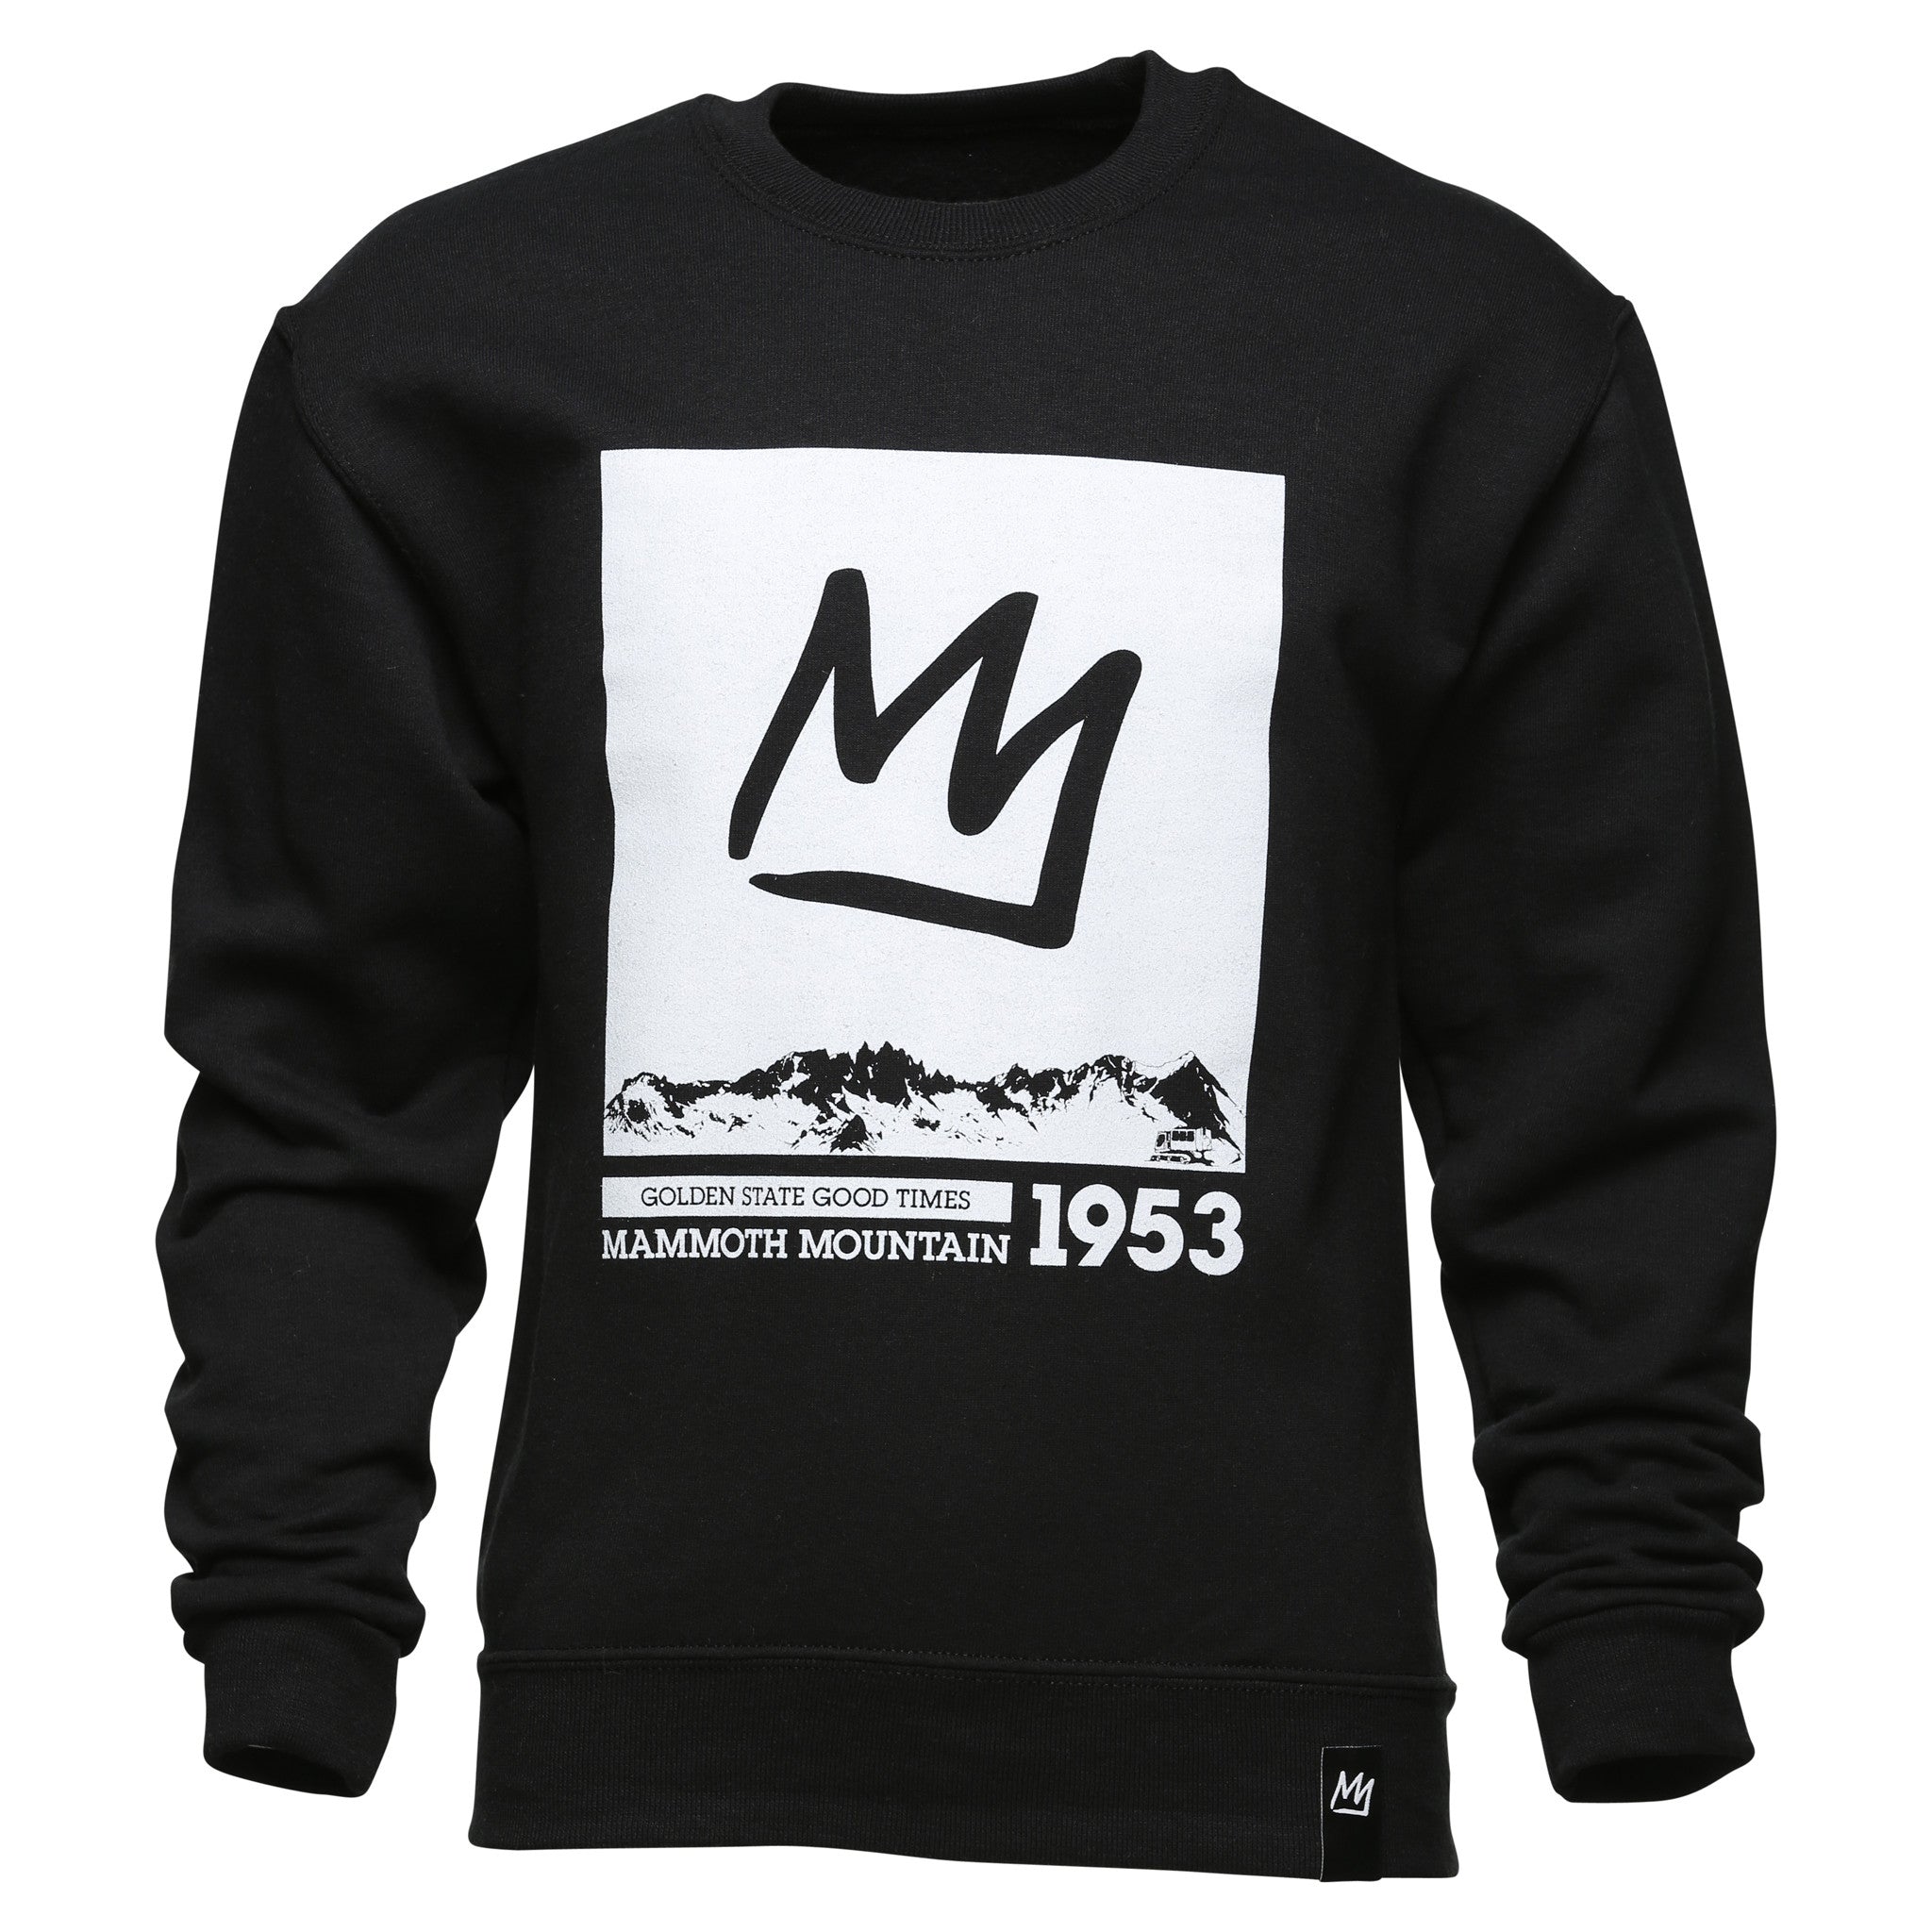 Crown Youth Sweatshirt - Mammoth Mountain